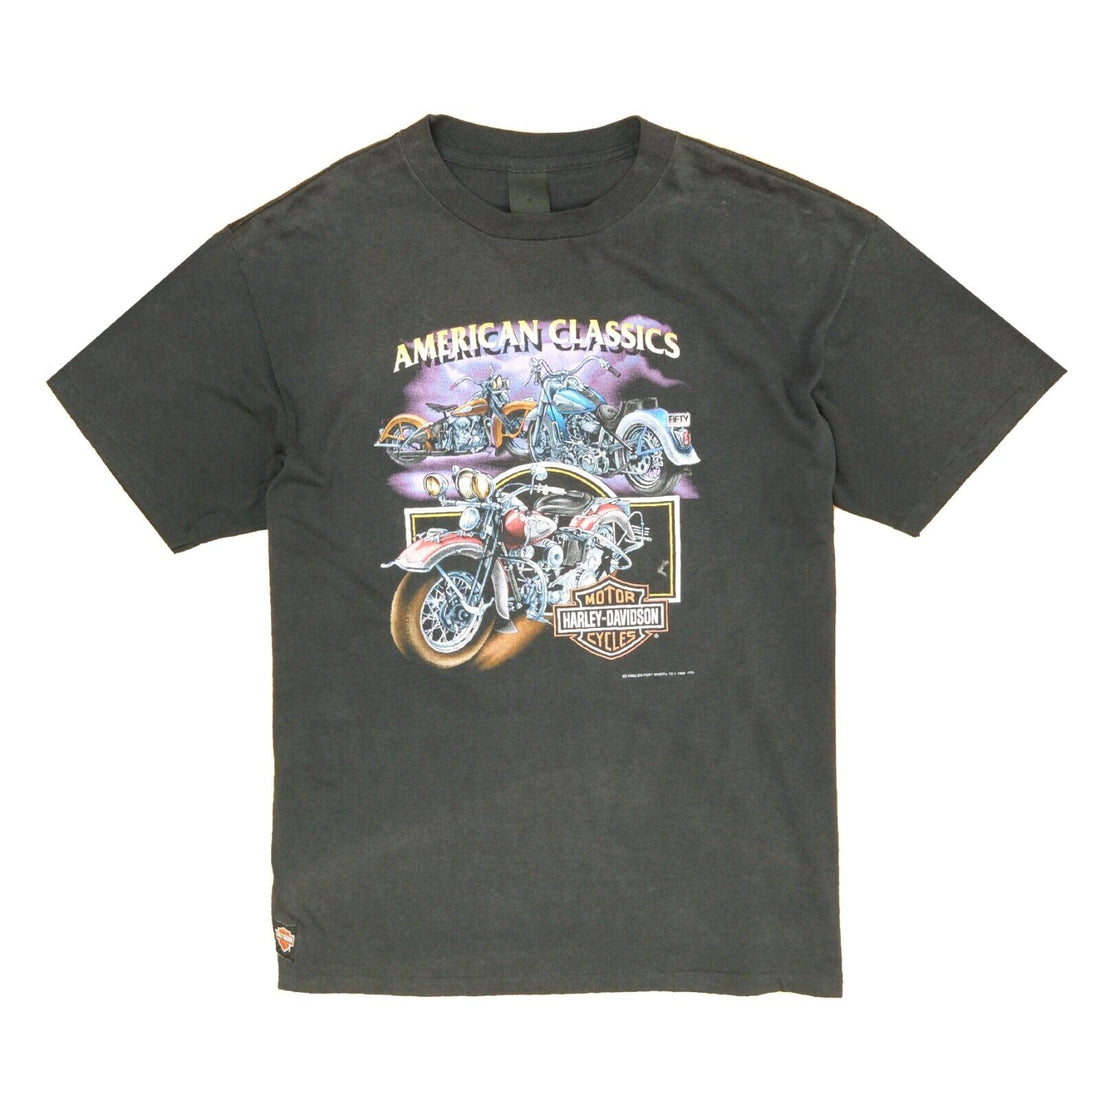 Vintage Harley Davidson 3D Emblem American Classics T-Shirt Size XL 1992 90s